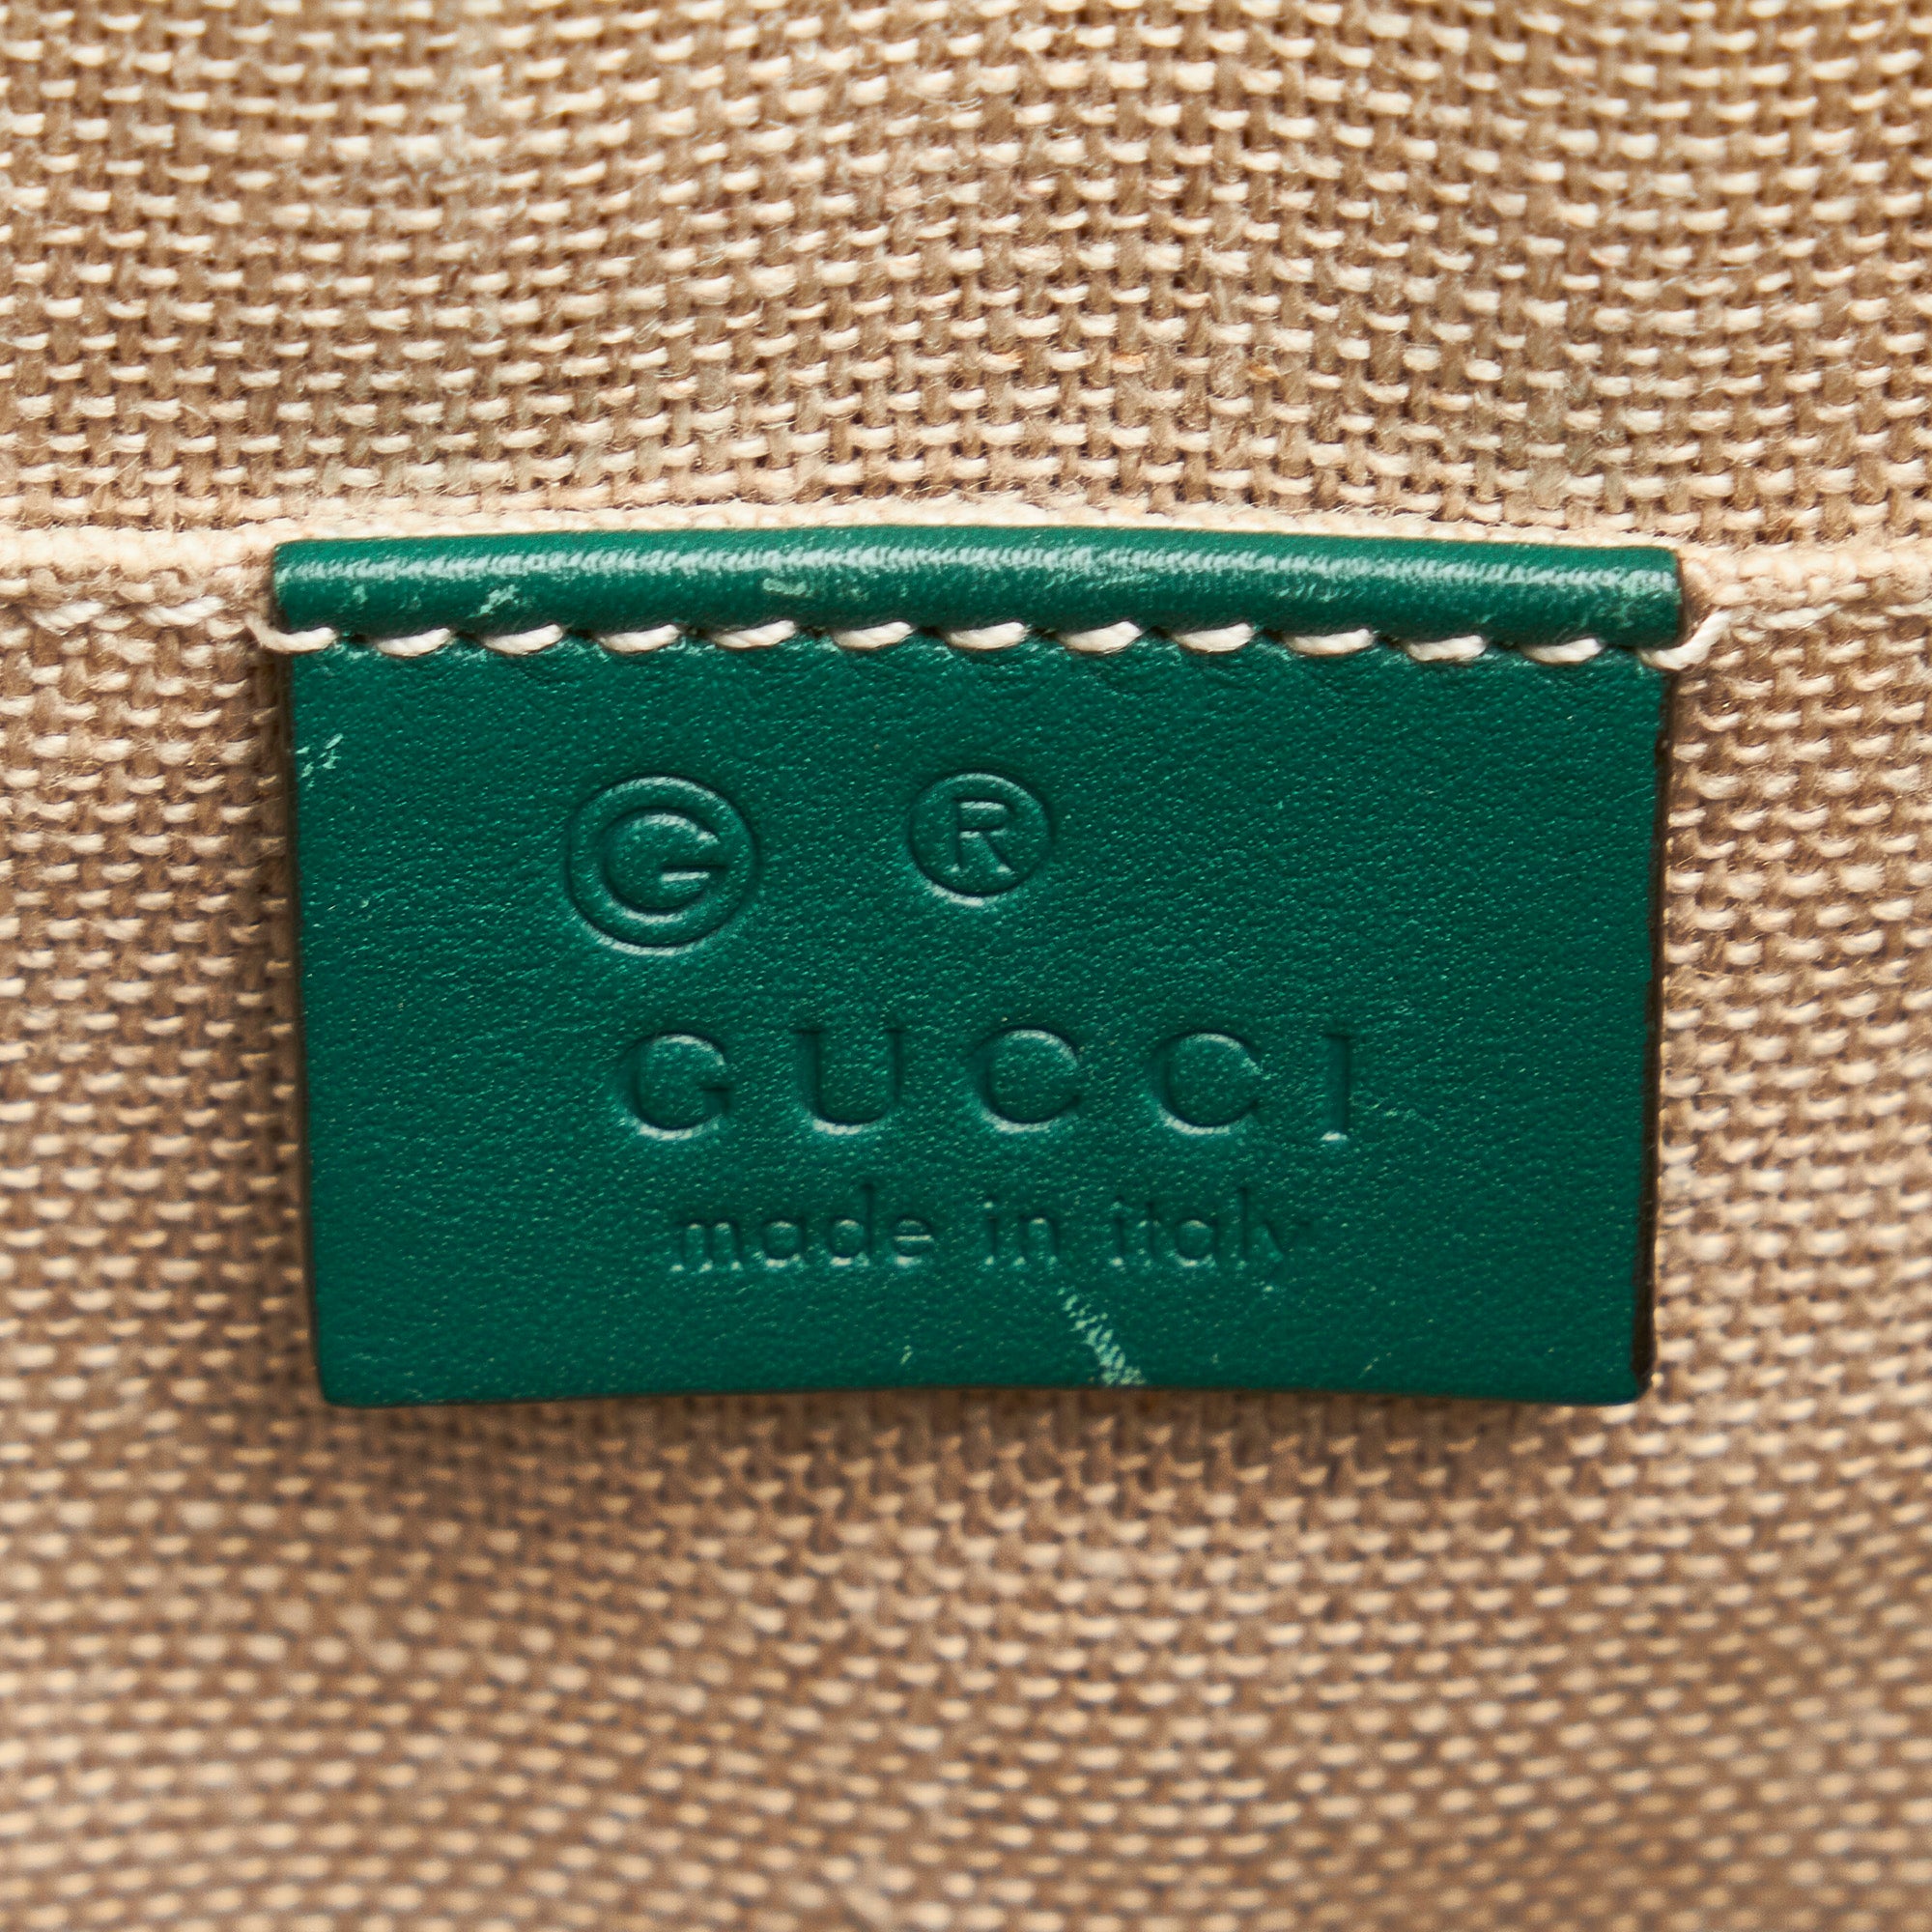 Gucci Dome Handbag Mini Teal Blue Microguccissima